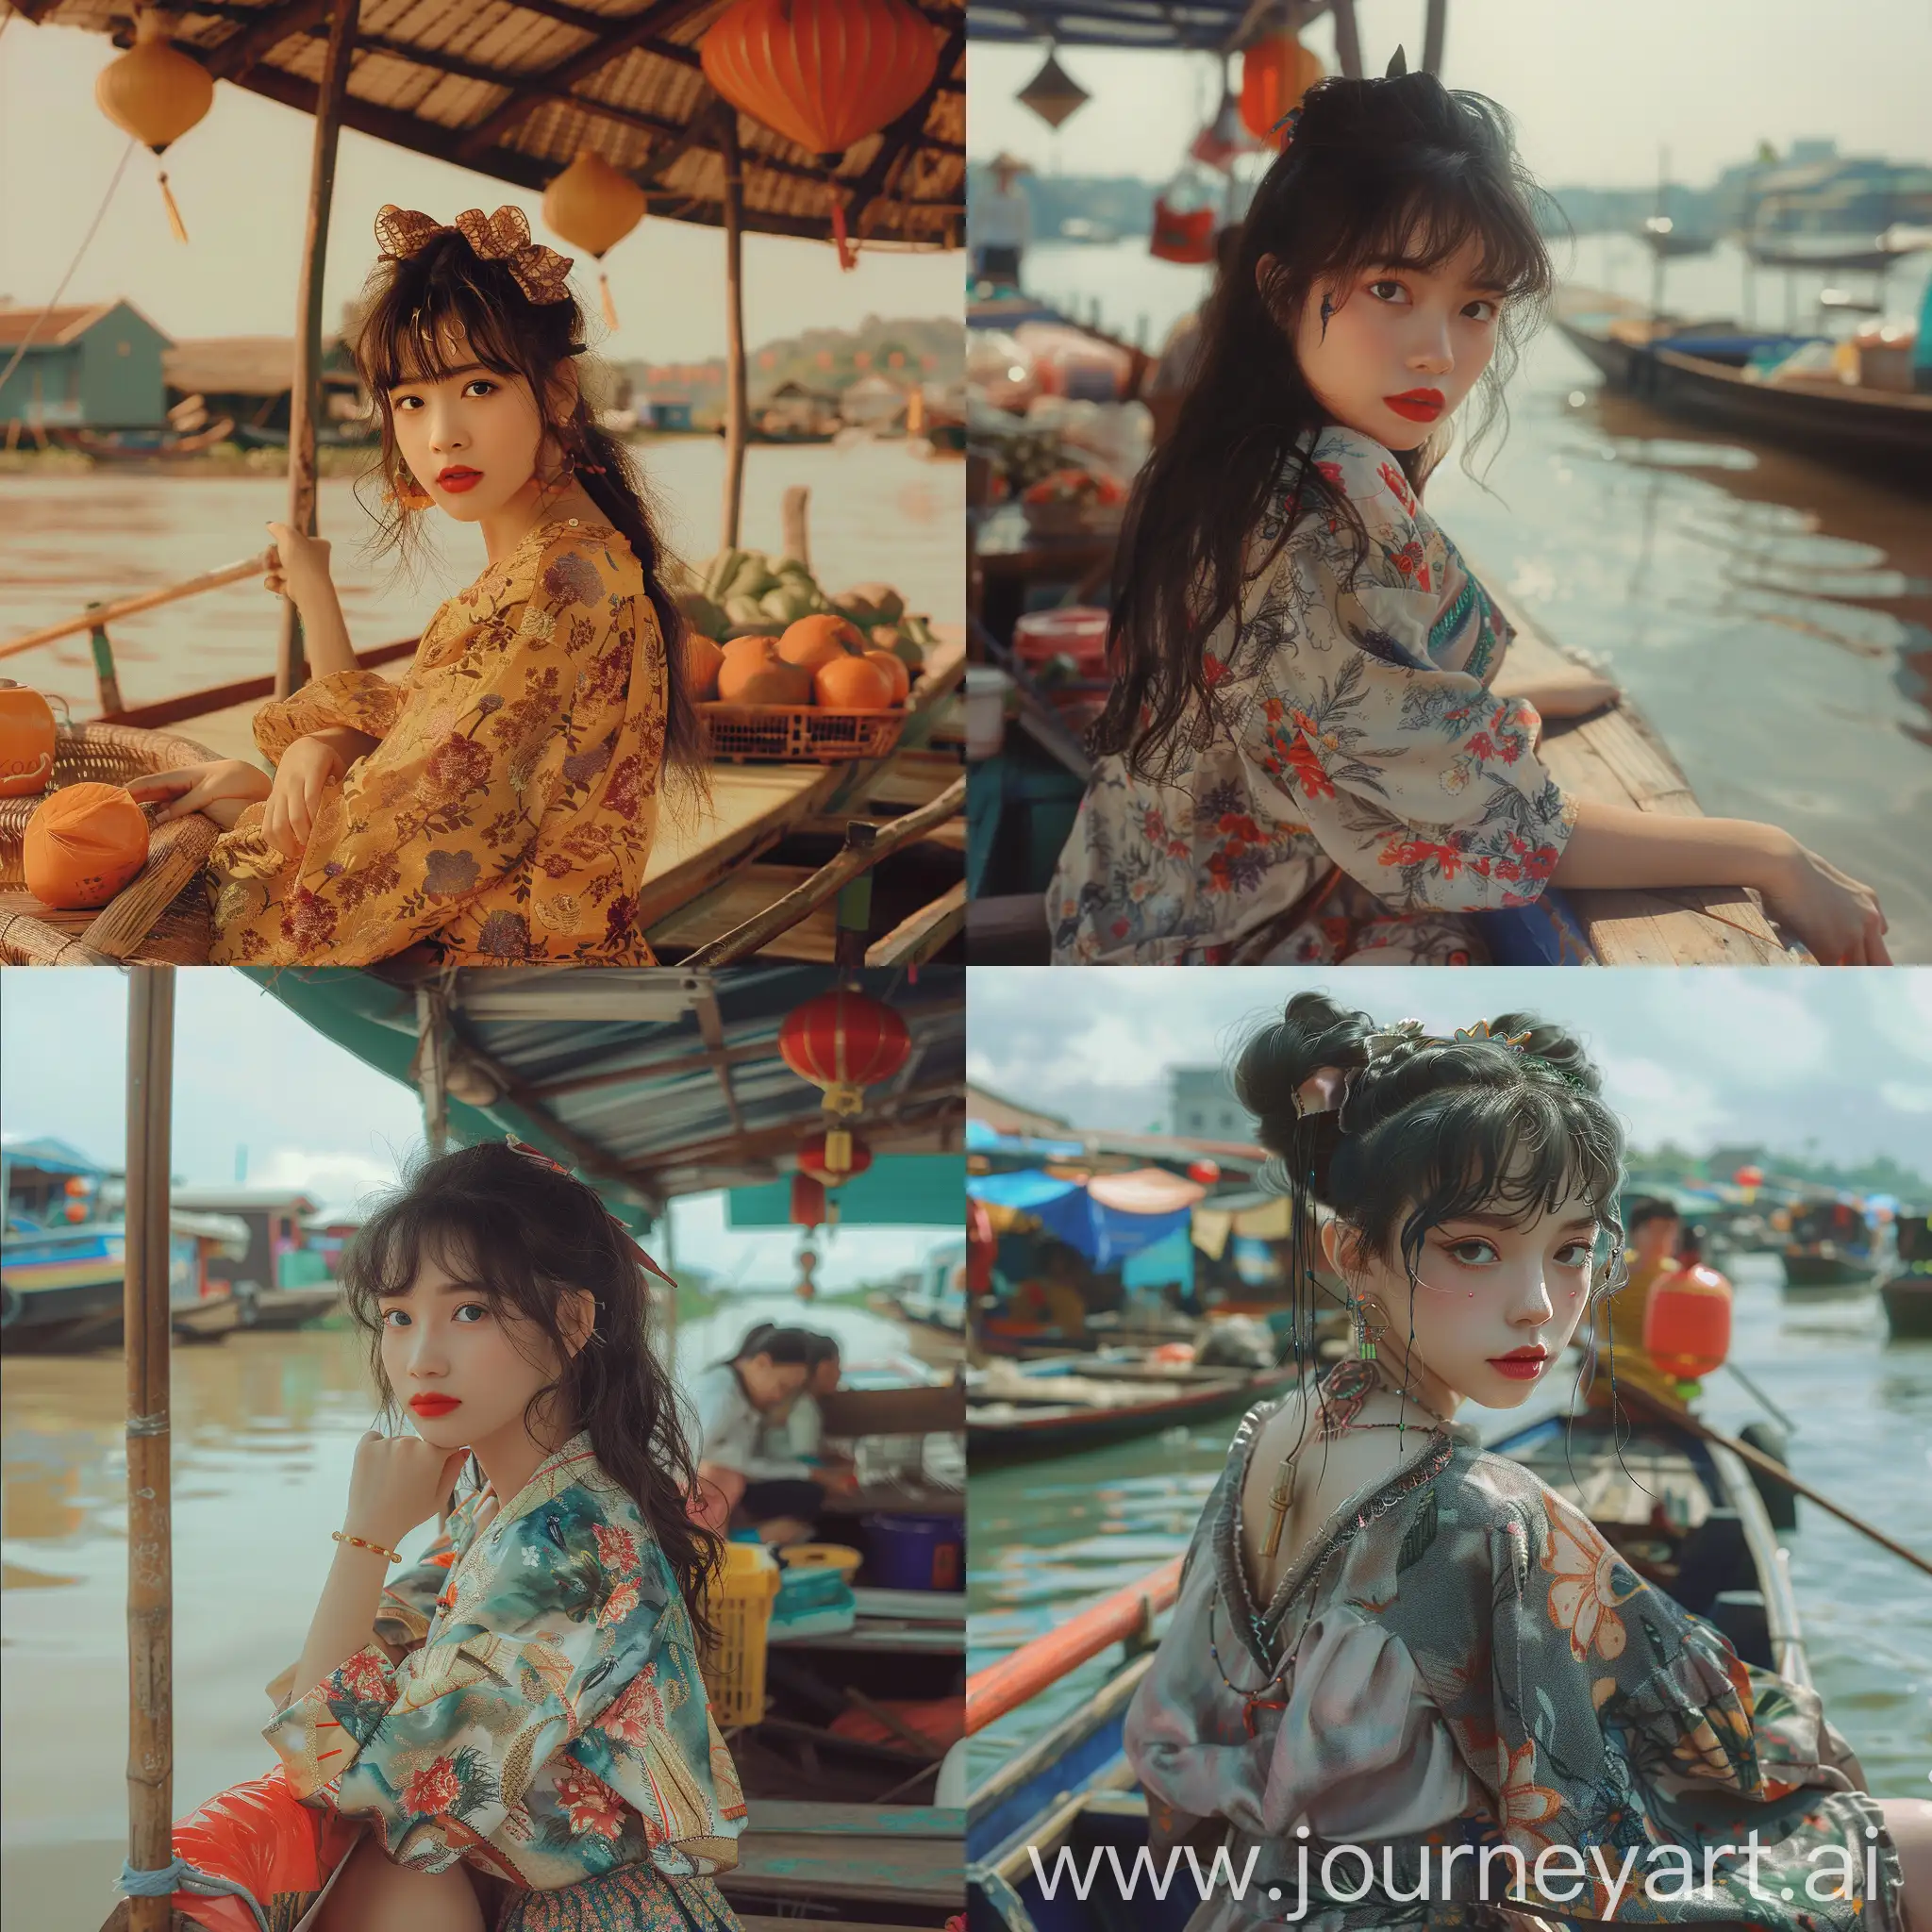 Asian-90s-Style-Girl-on-Boat-at-Cai-Rang-Floating-Market